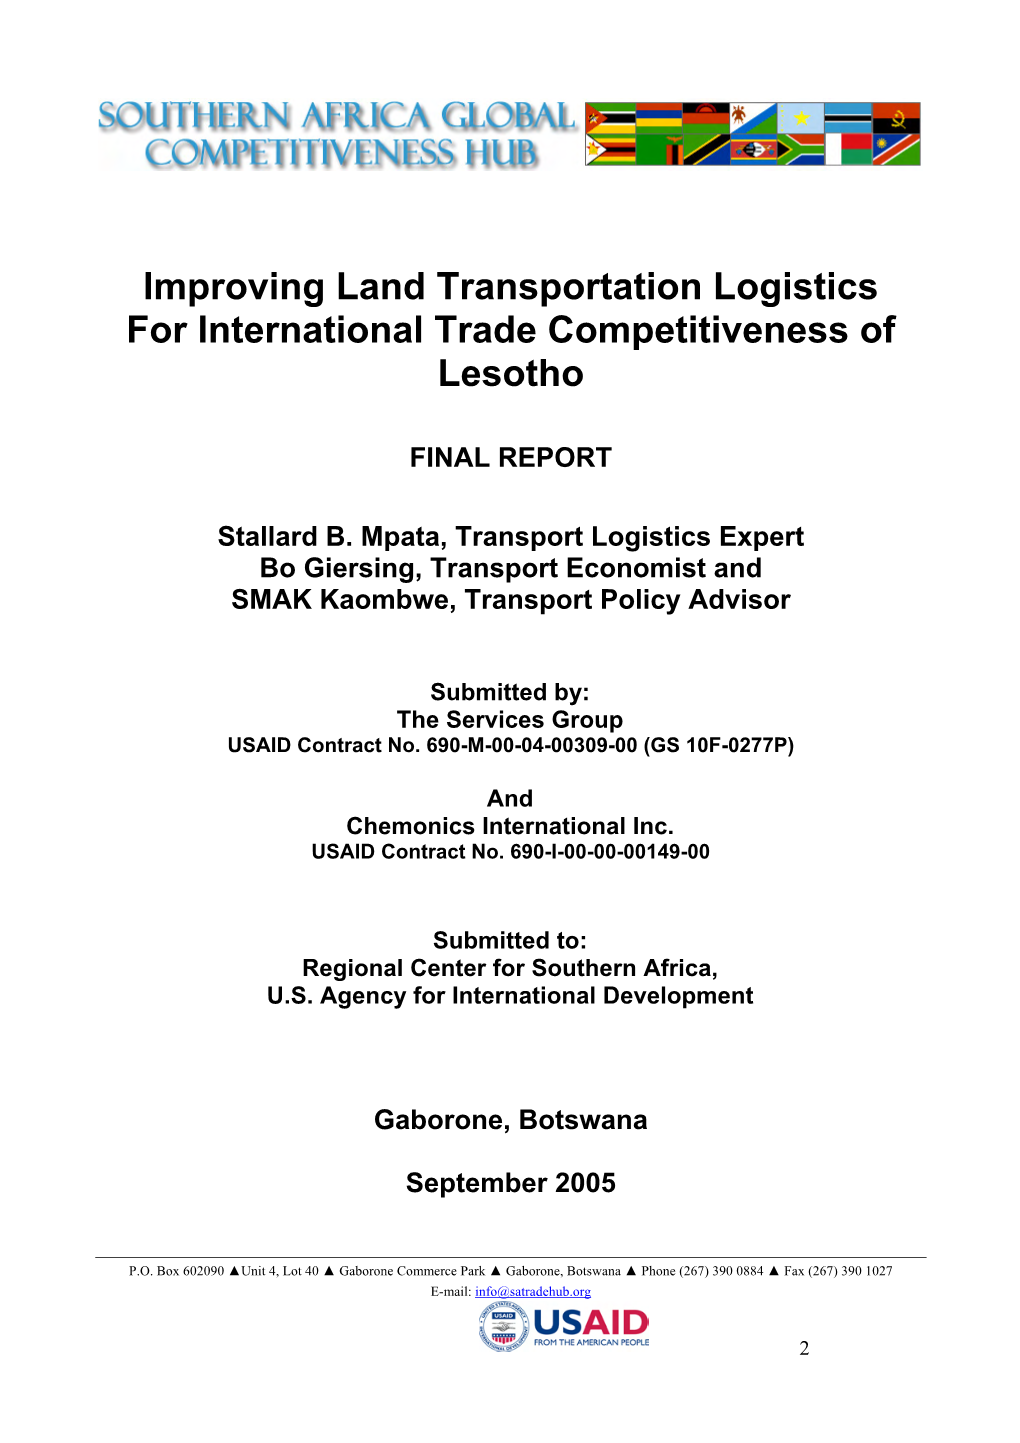 Improving Land Transportation Logistics for International Trade Competitiveness of Lesotho